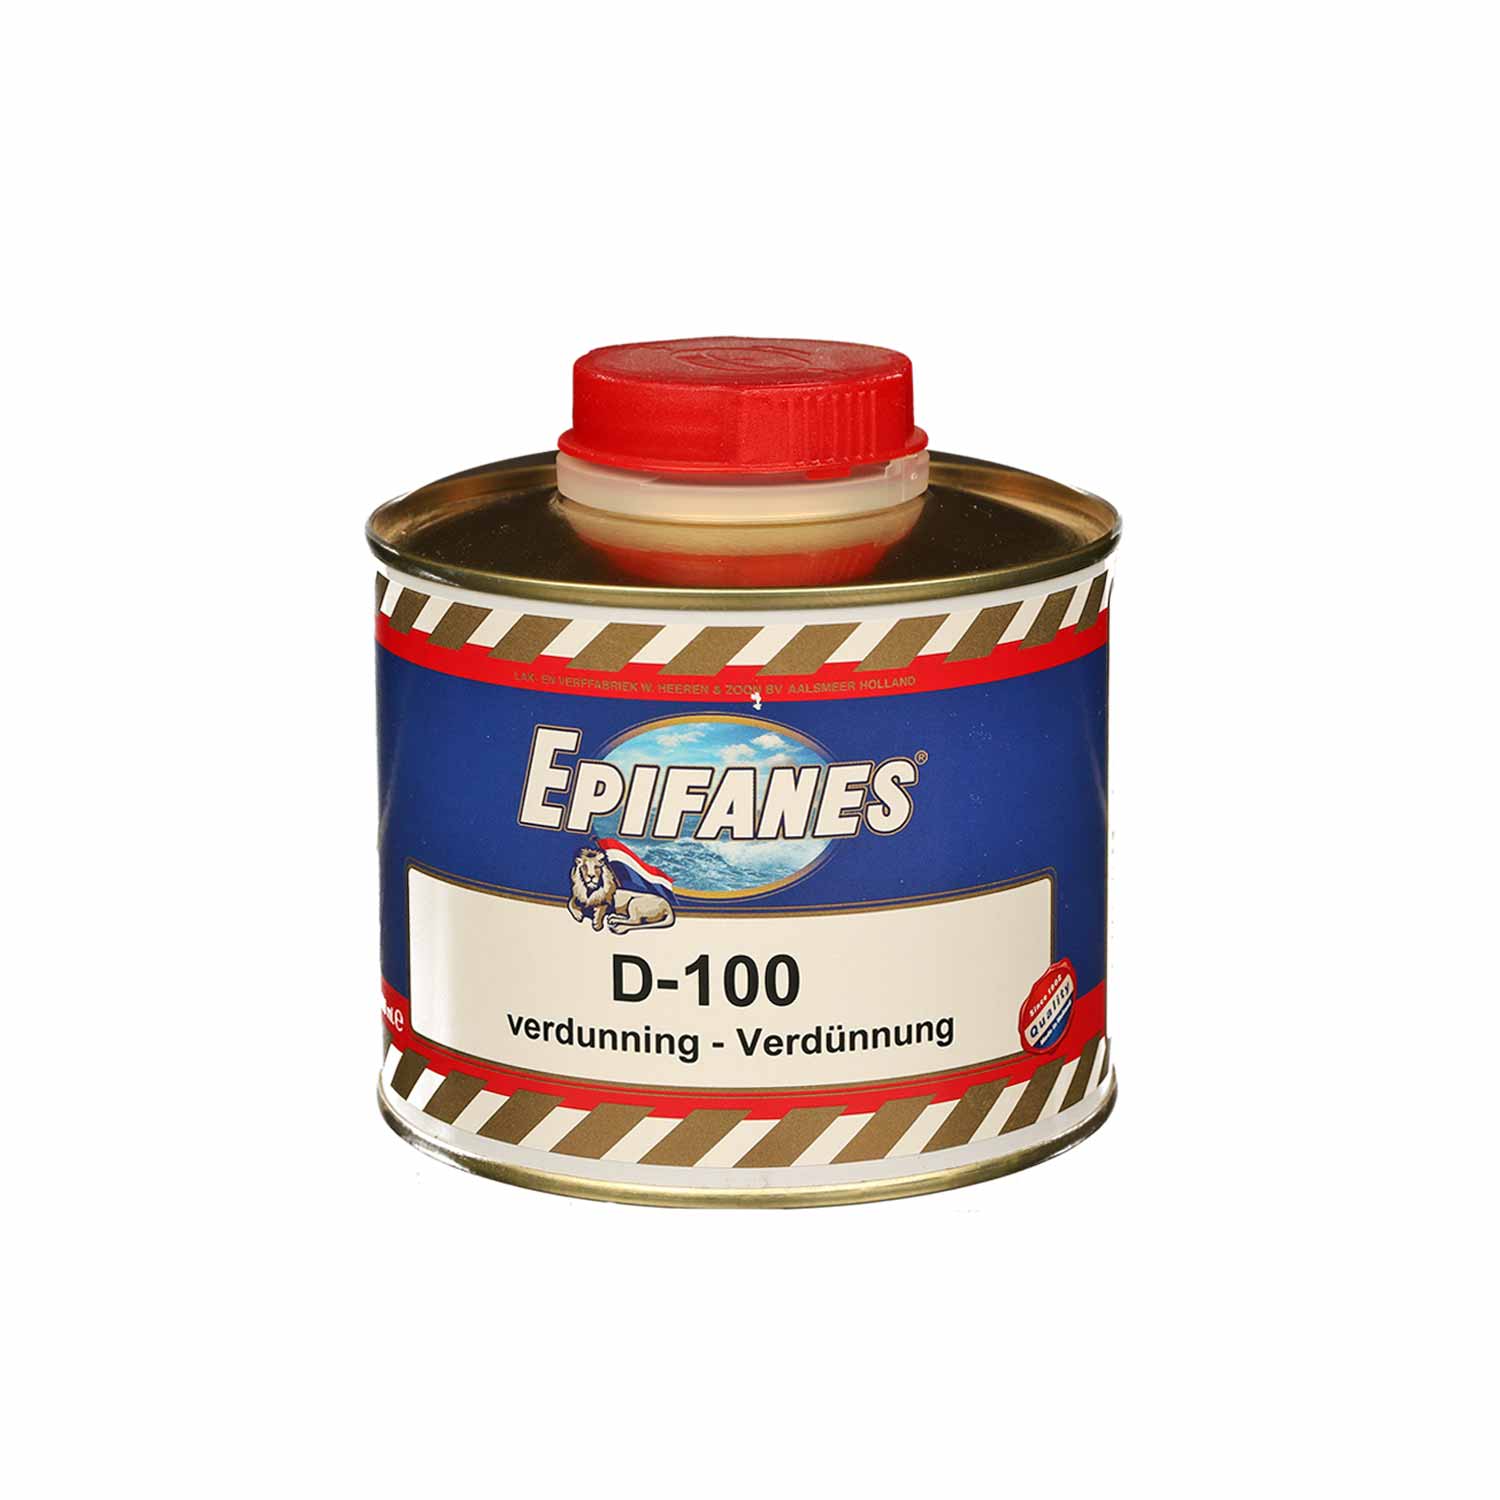 Epifanes Verdünnung D-100 für Antifouling E7-7A